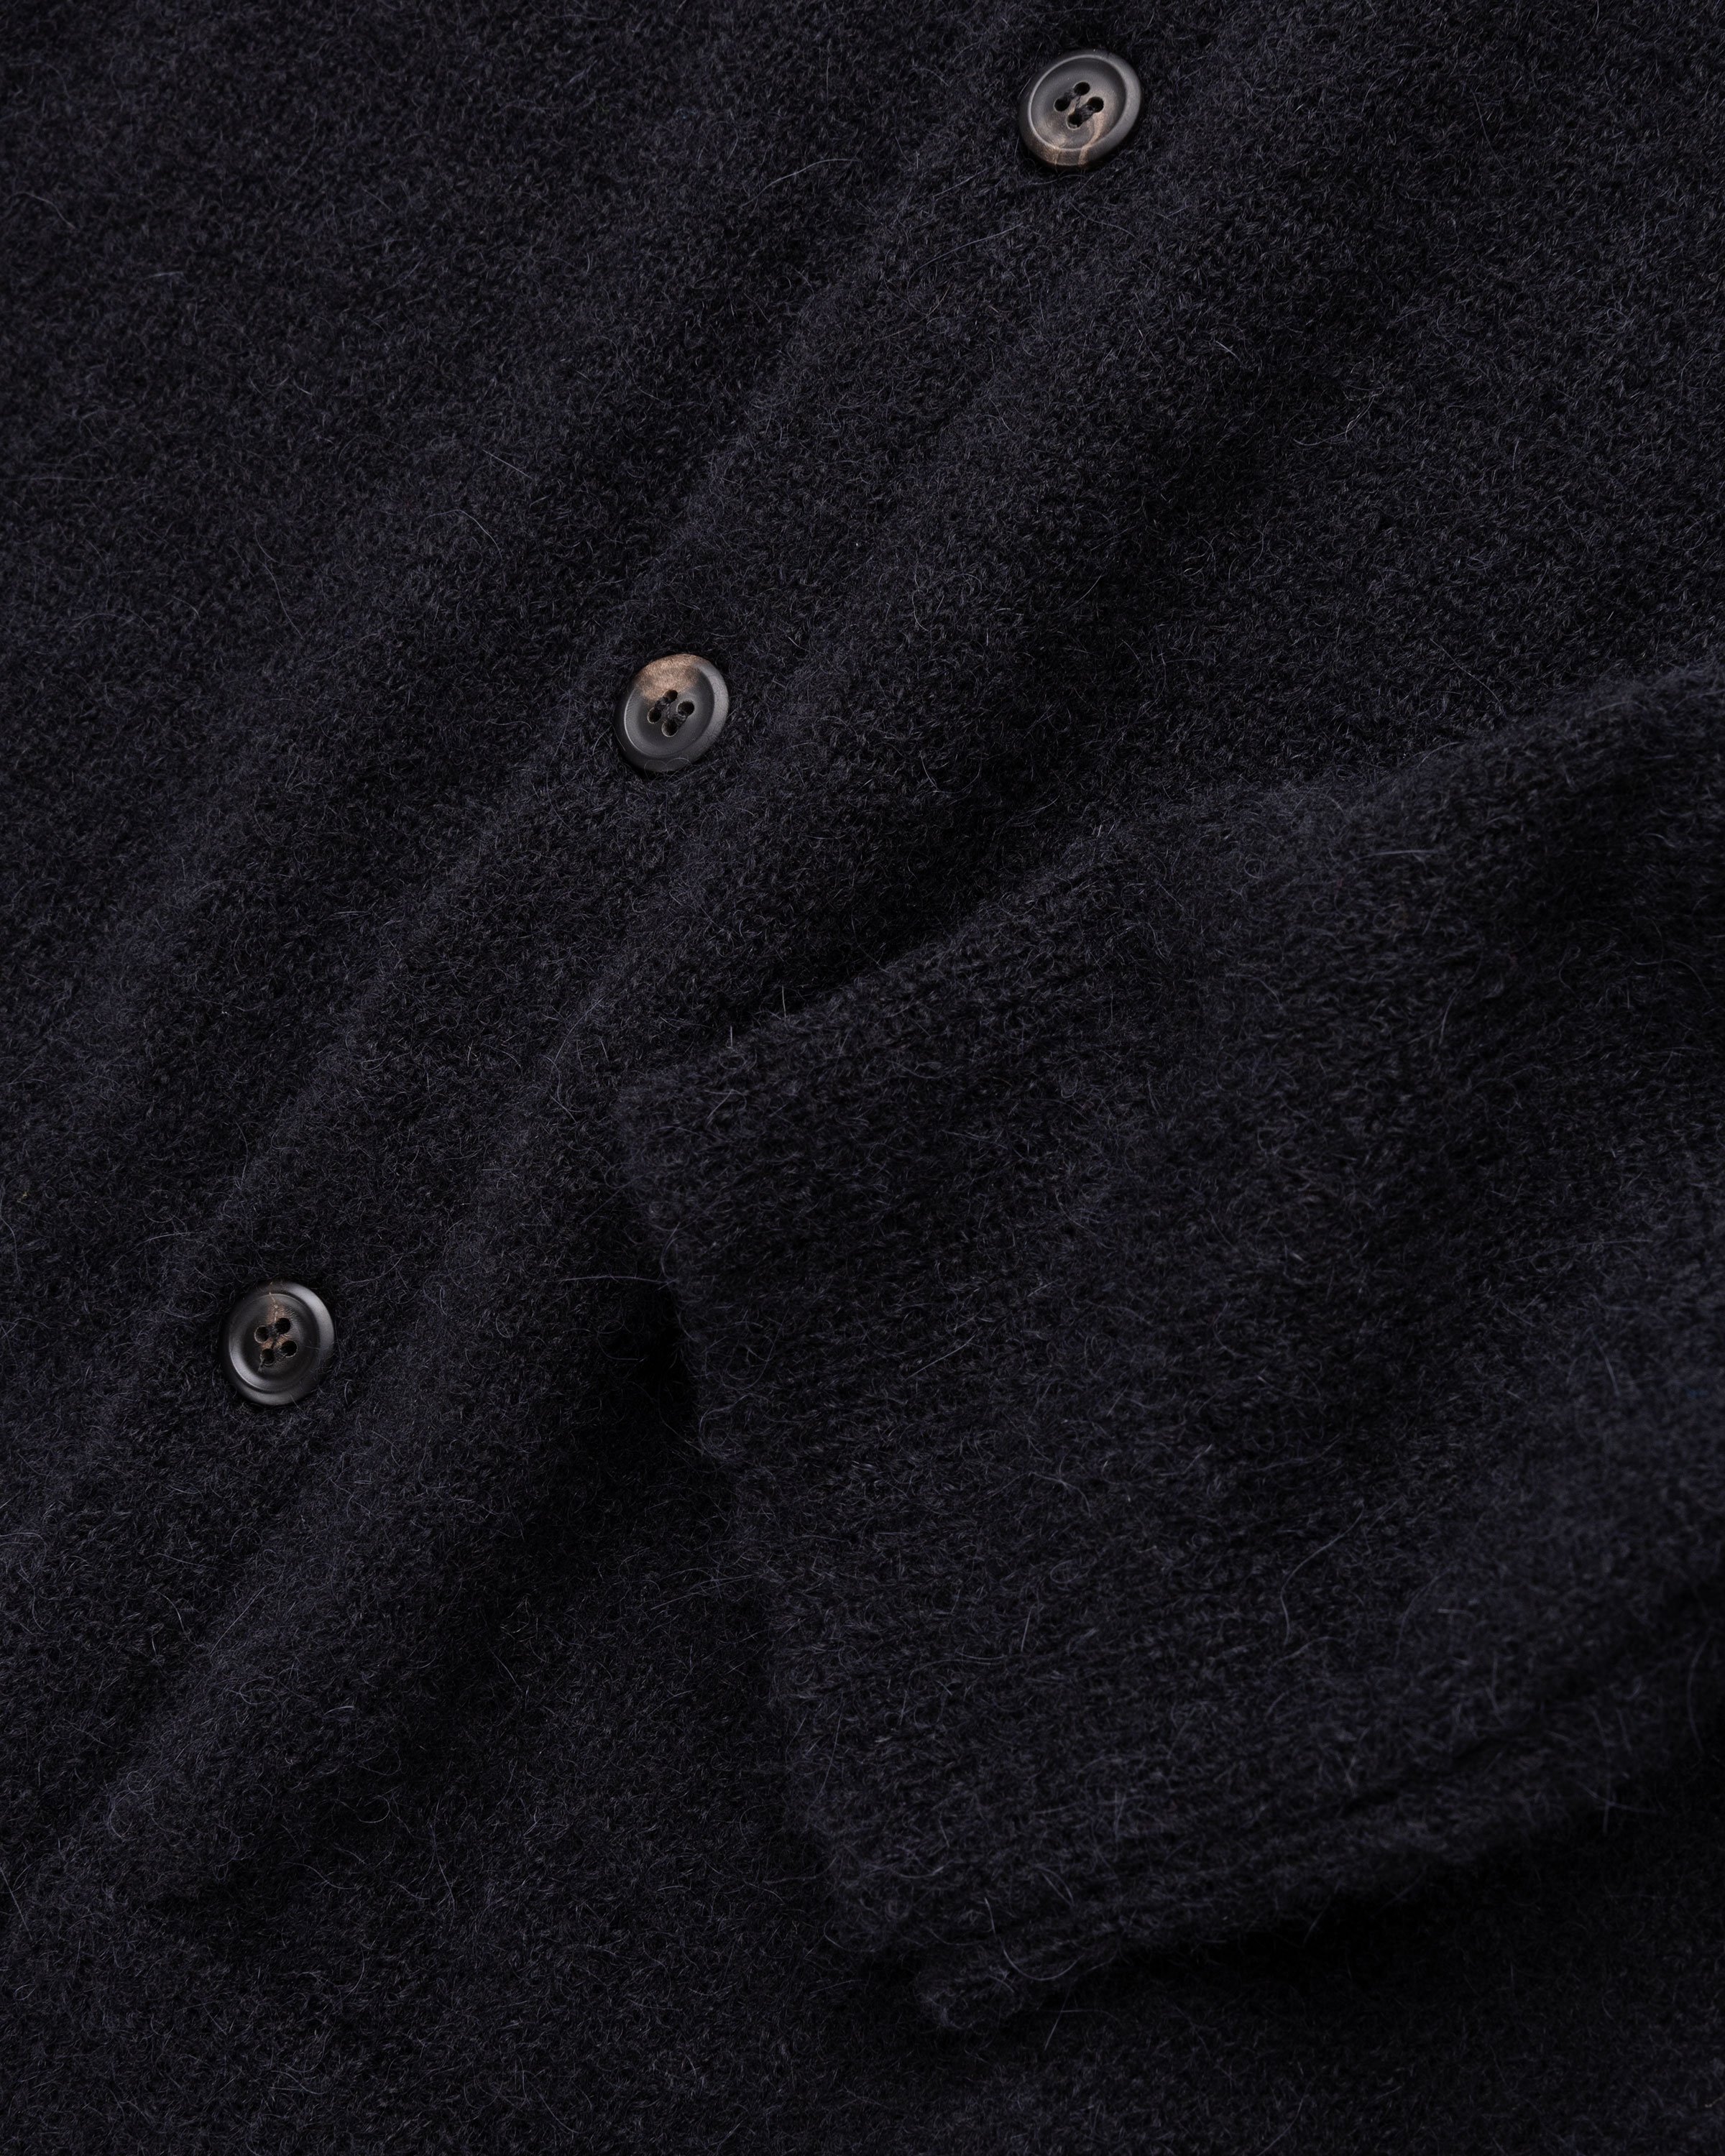 Our Legacy - Evening Polo Black Fuzzy Alpaca - Clothing - Black - Image 6